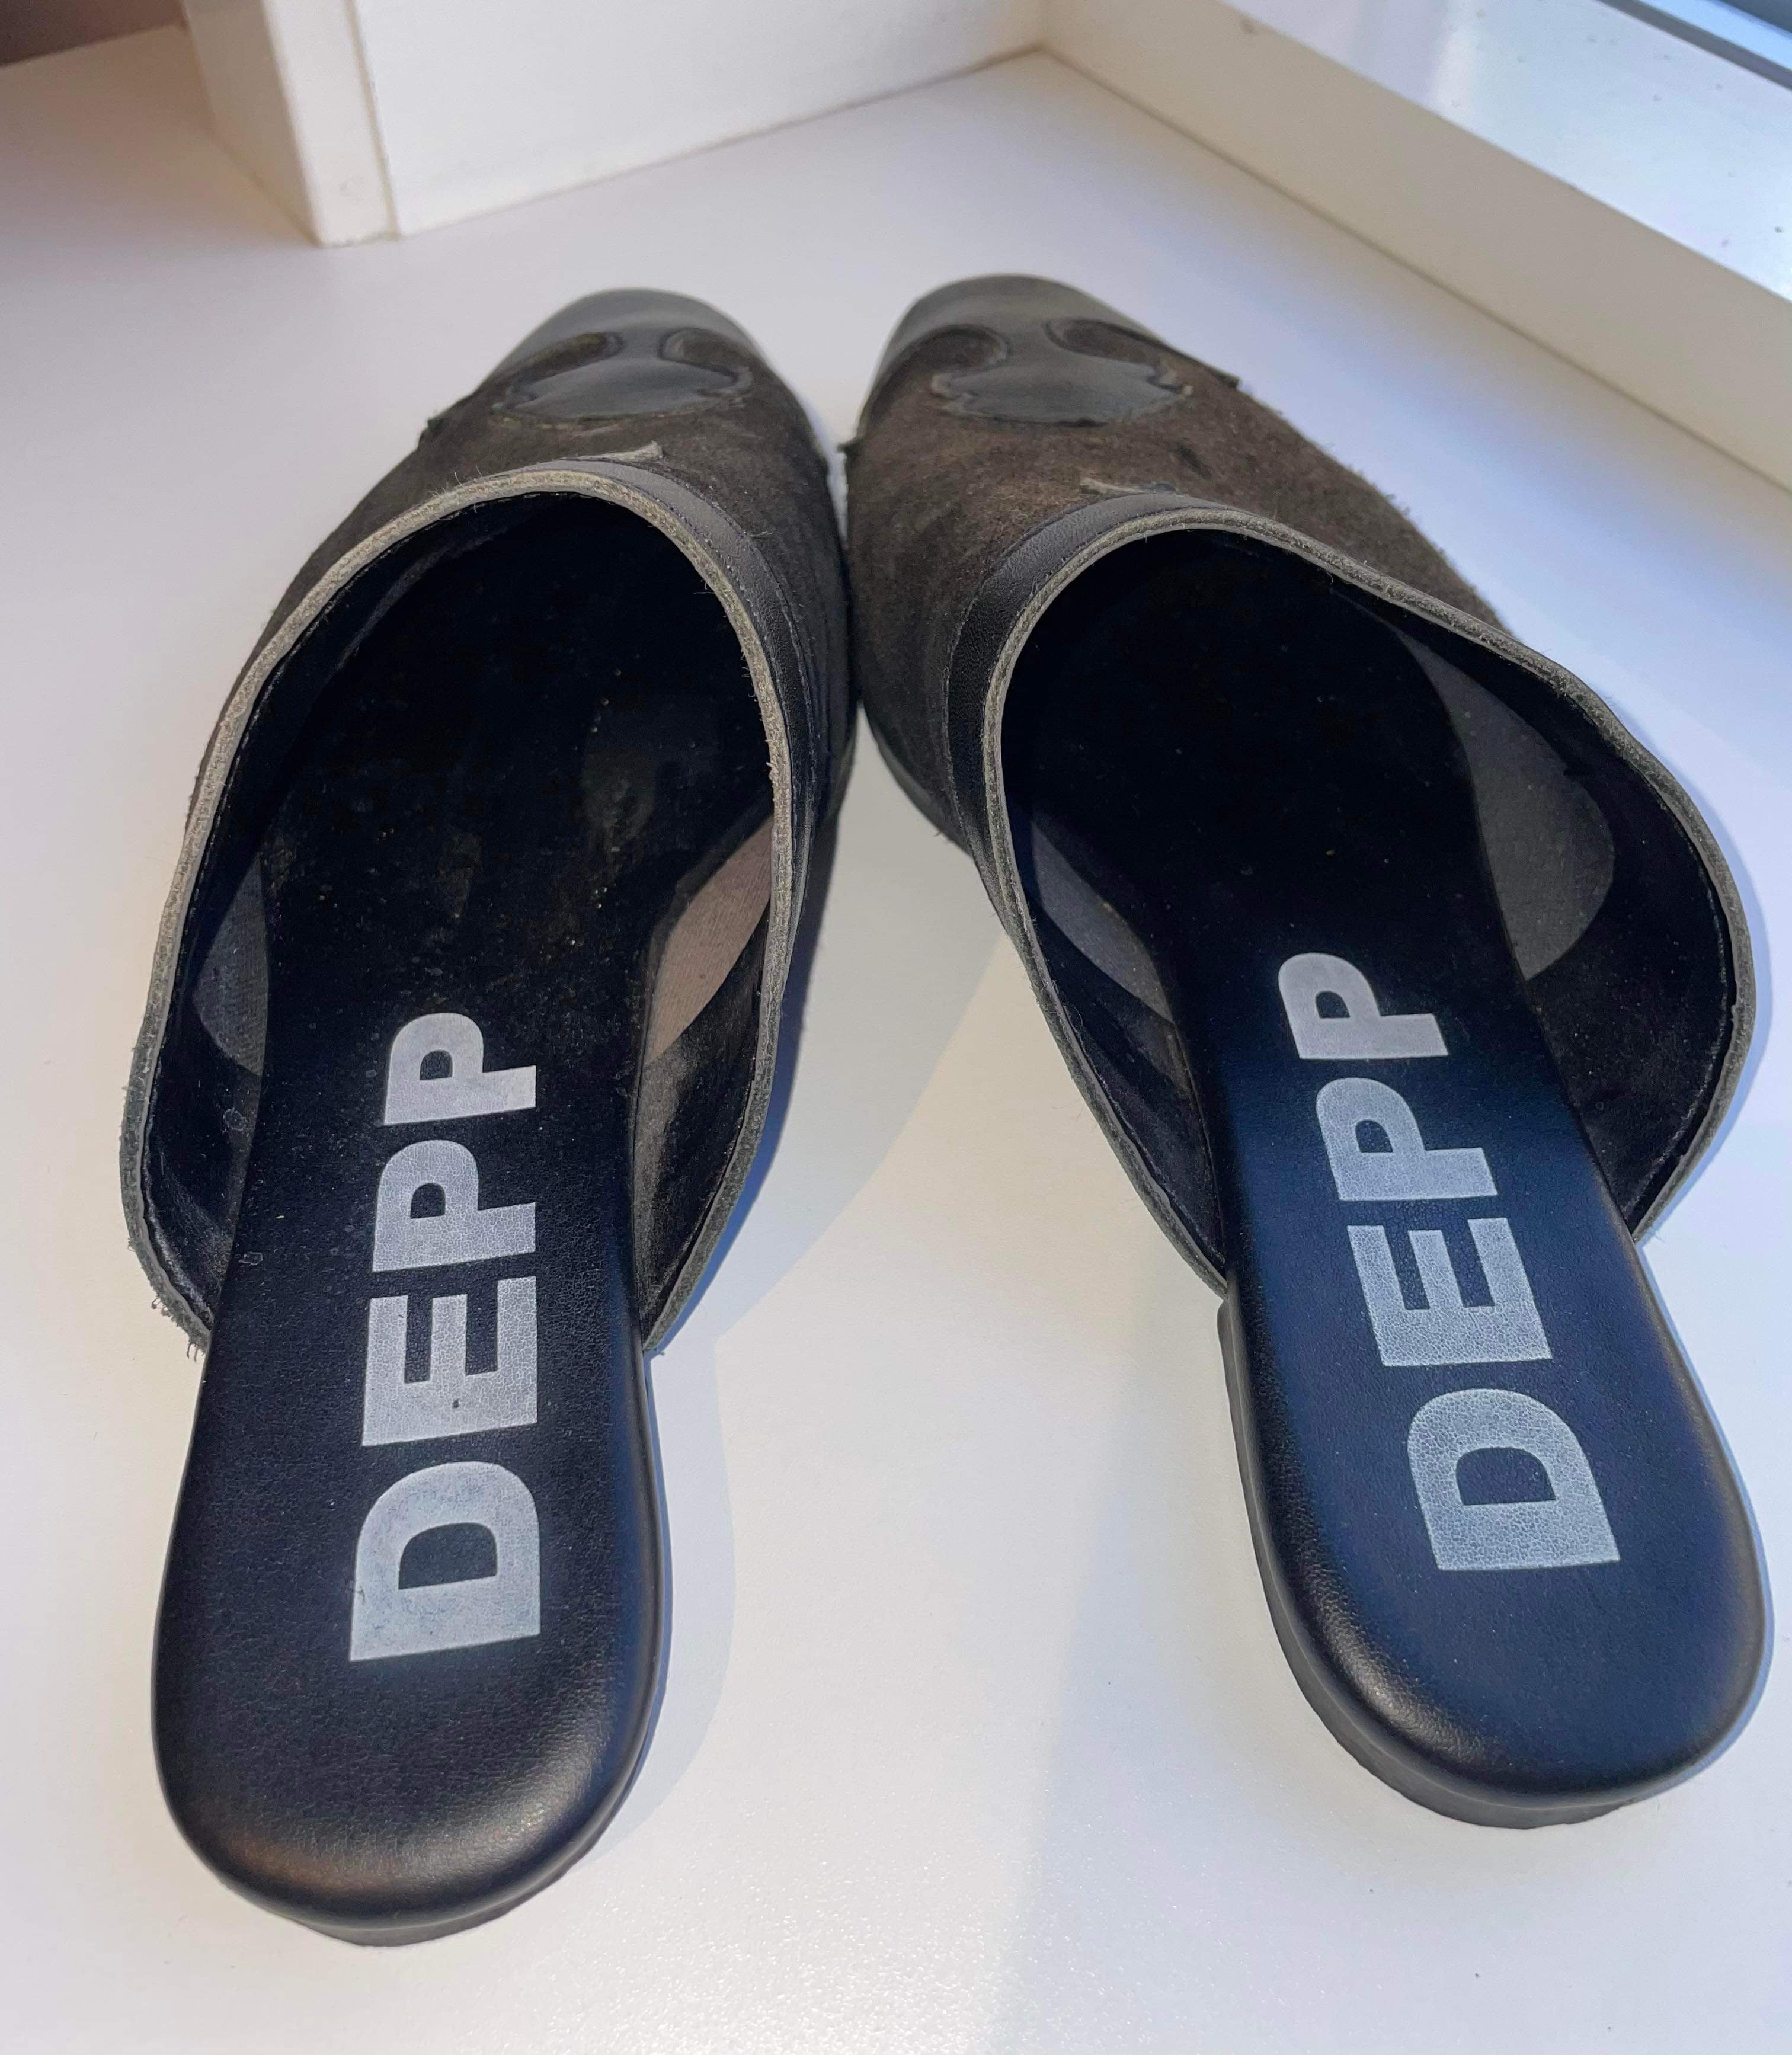 Depp - Slippers - Size: 37